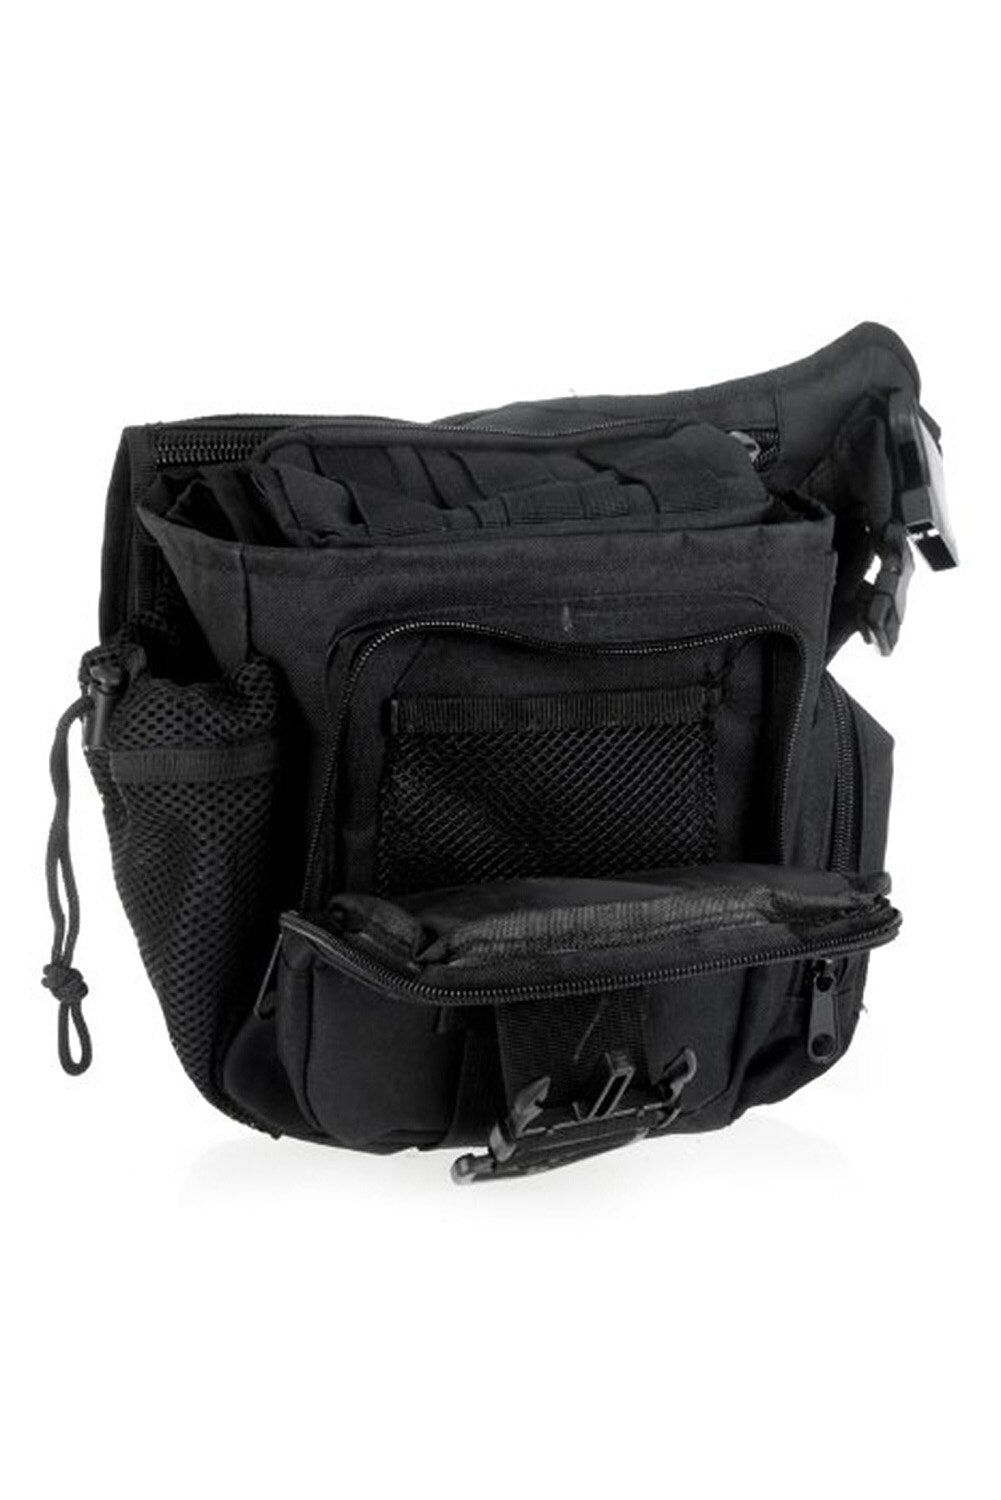 2017 600D Nylon Molle Shoulder Strap Bag Military Push Pack Belt Pouch Travel Camera Money Utility Bag Black - ebowsos